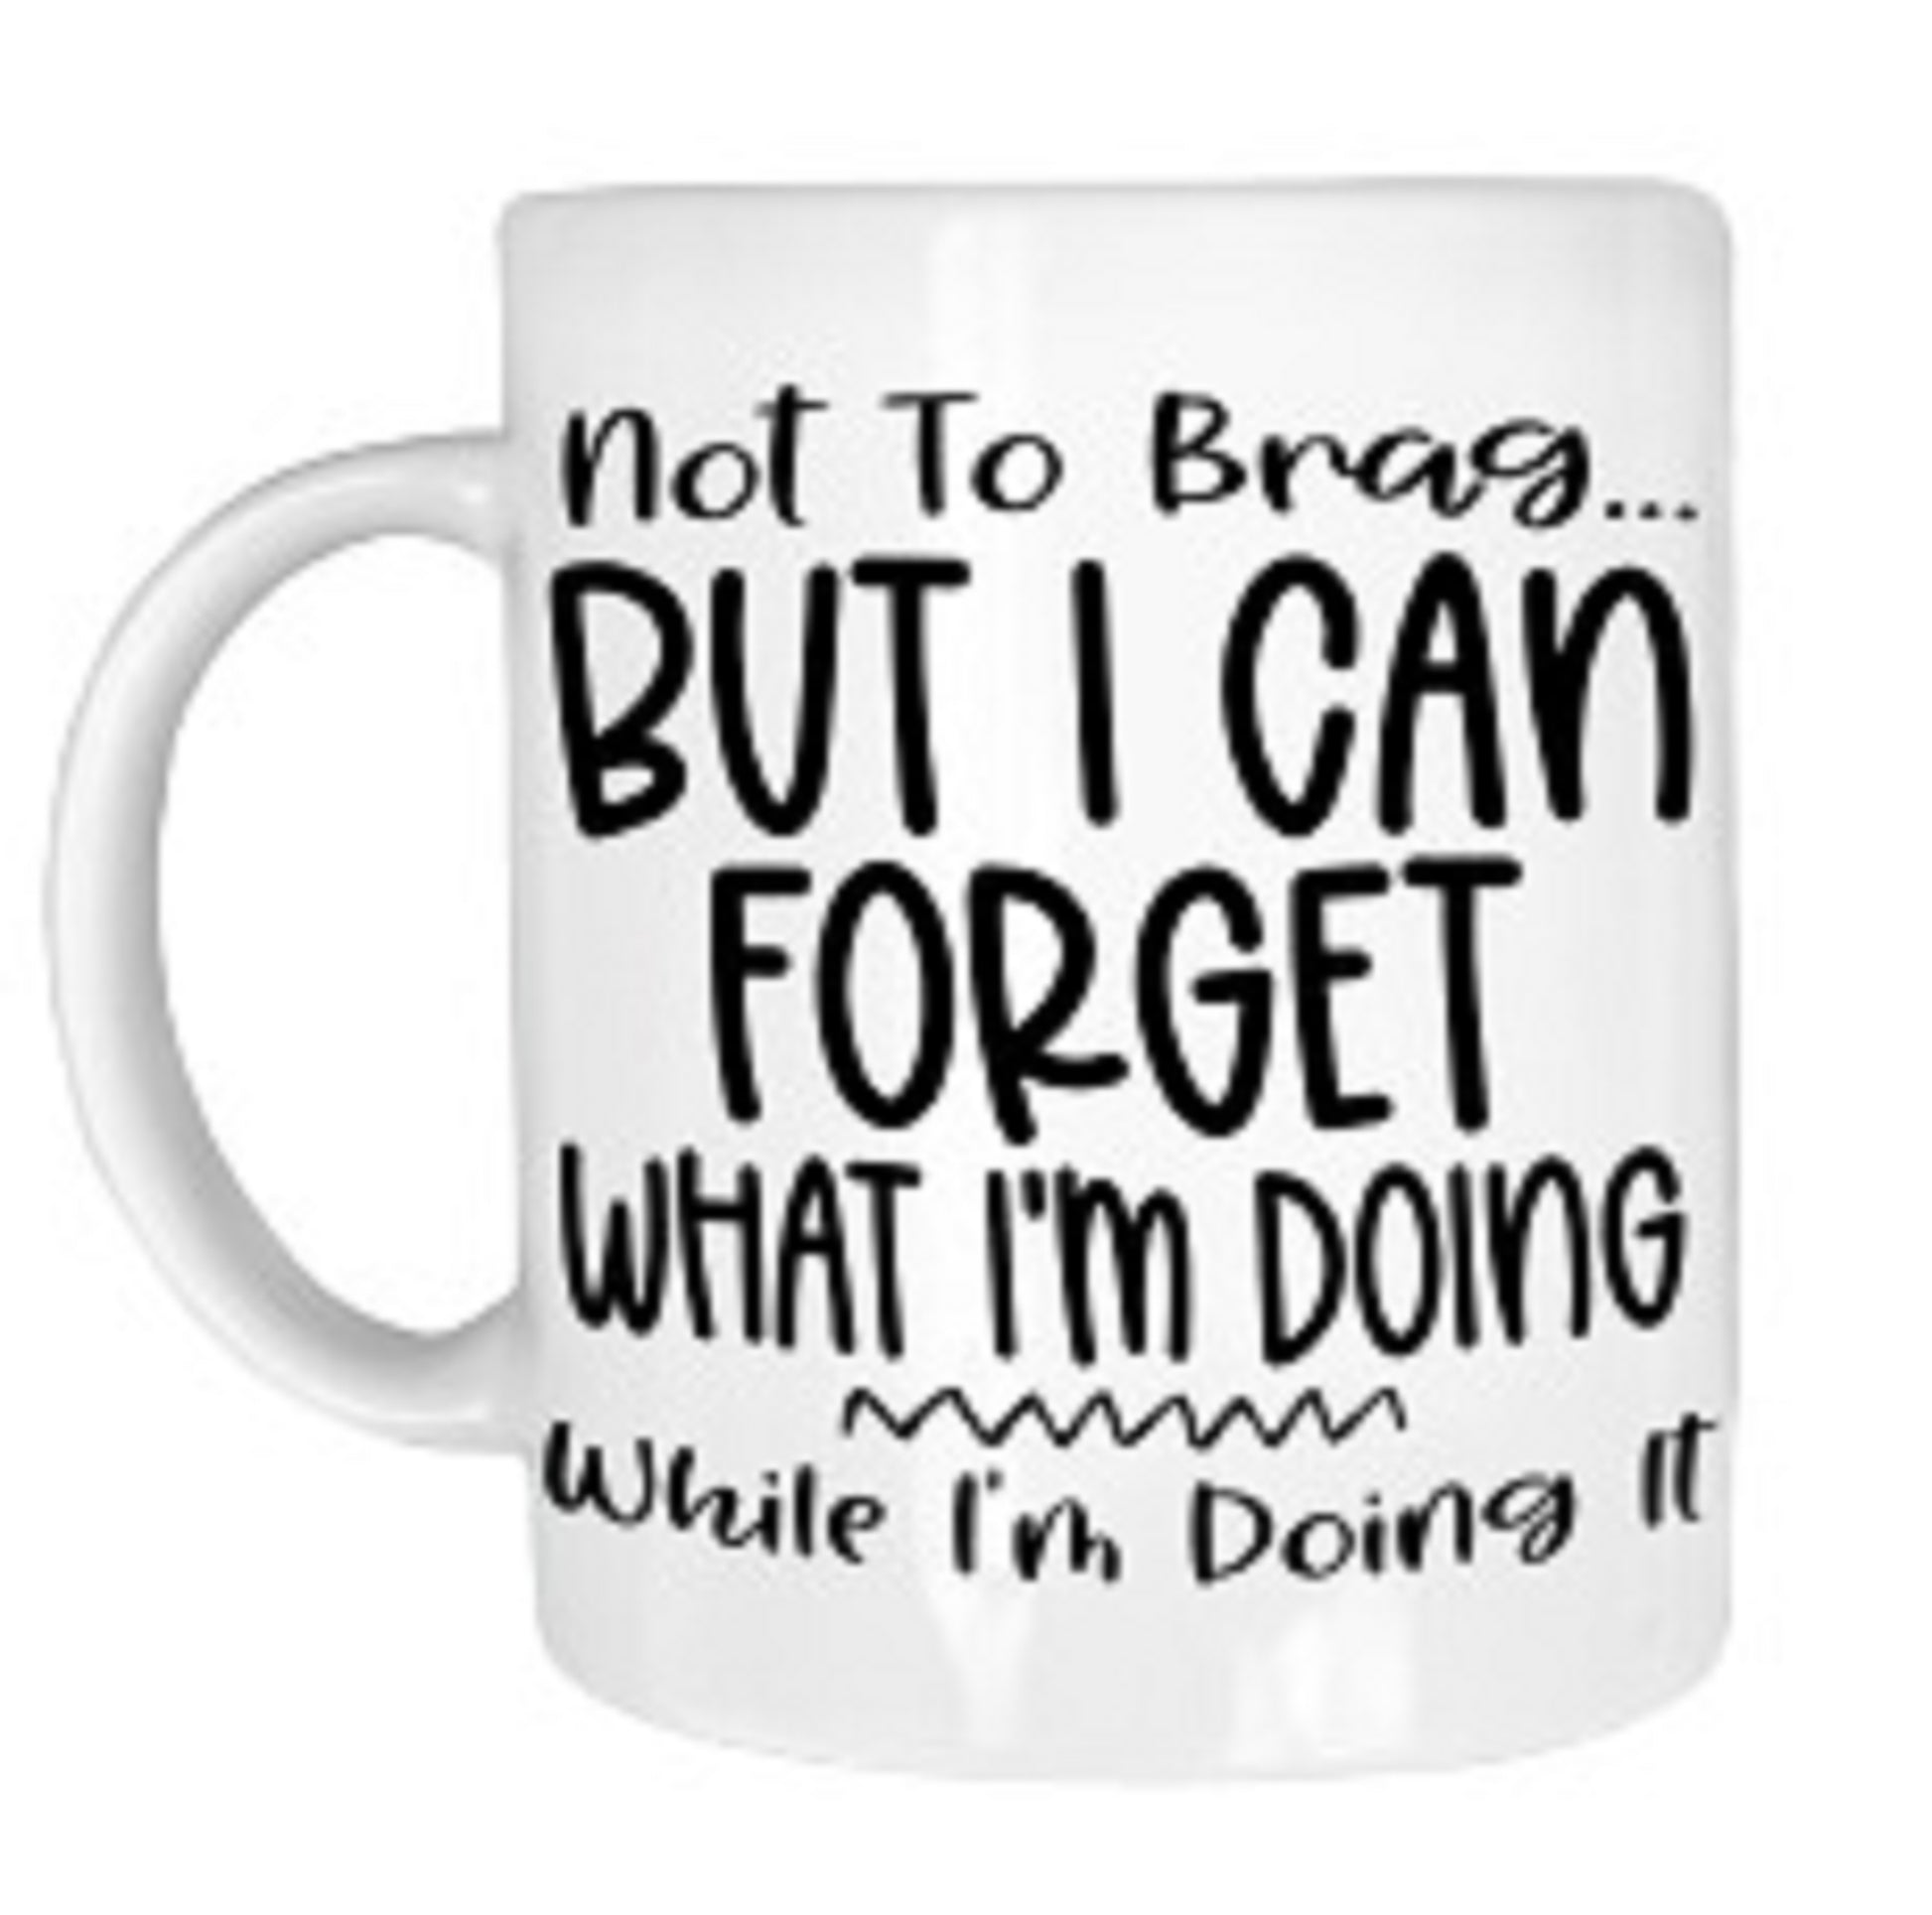  Not to Brag Funny Coffee Mug by Free Spirit Accessories sold by Free Spirit Accessories